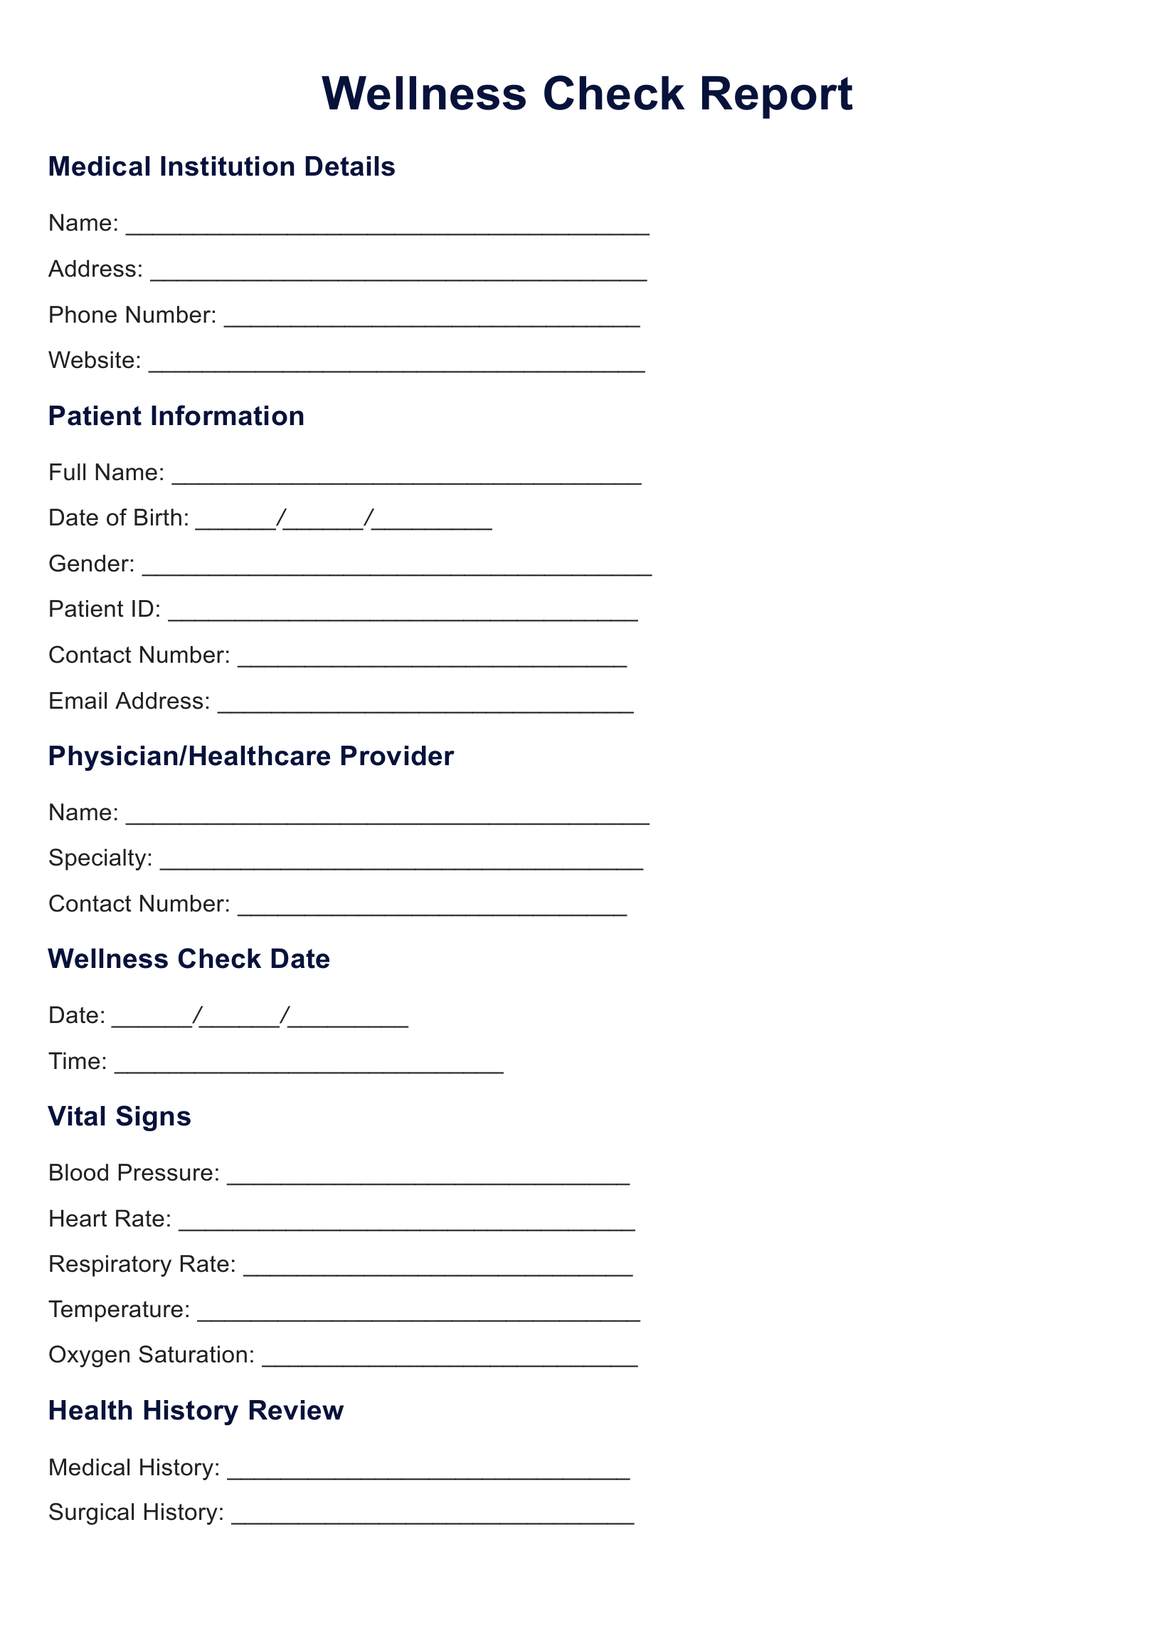 Wellness Check PDF Example